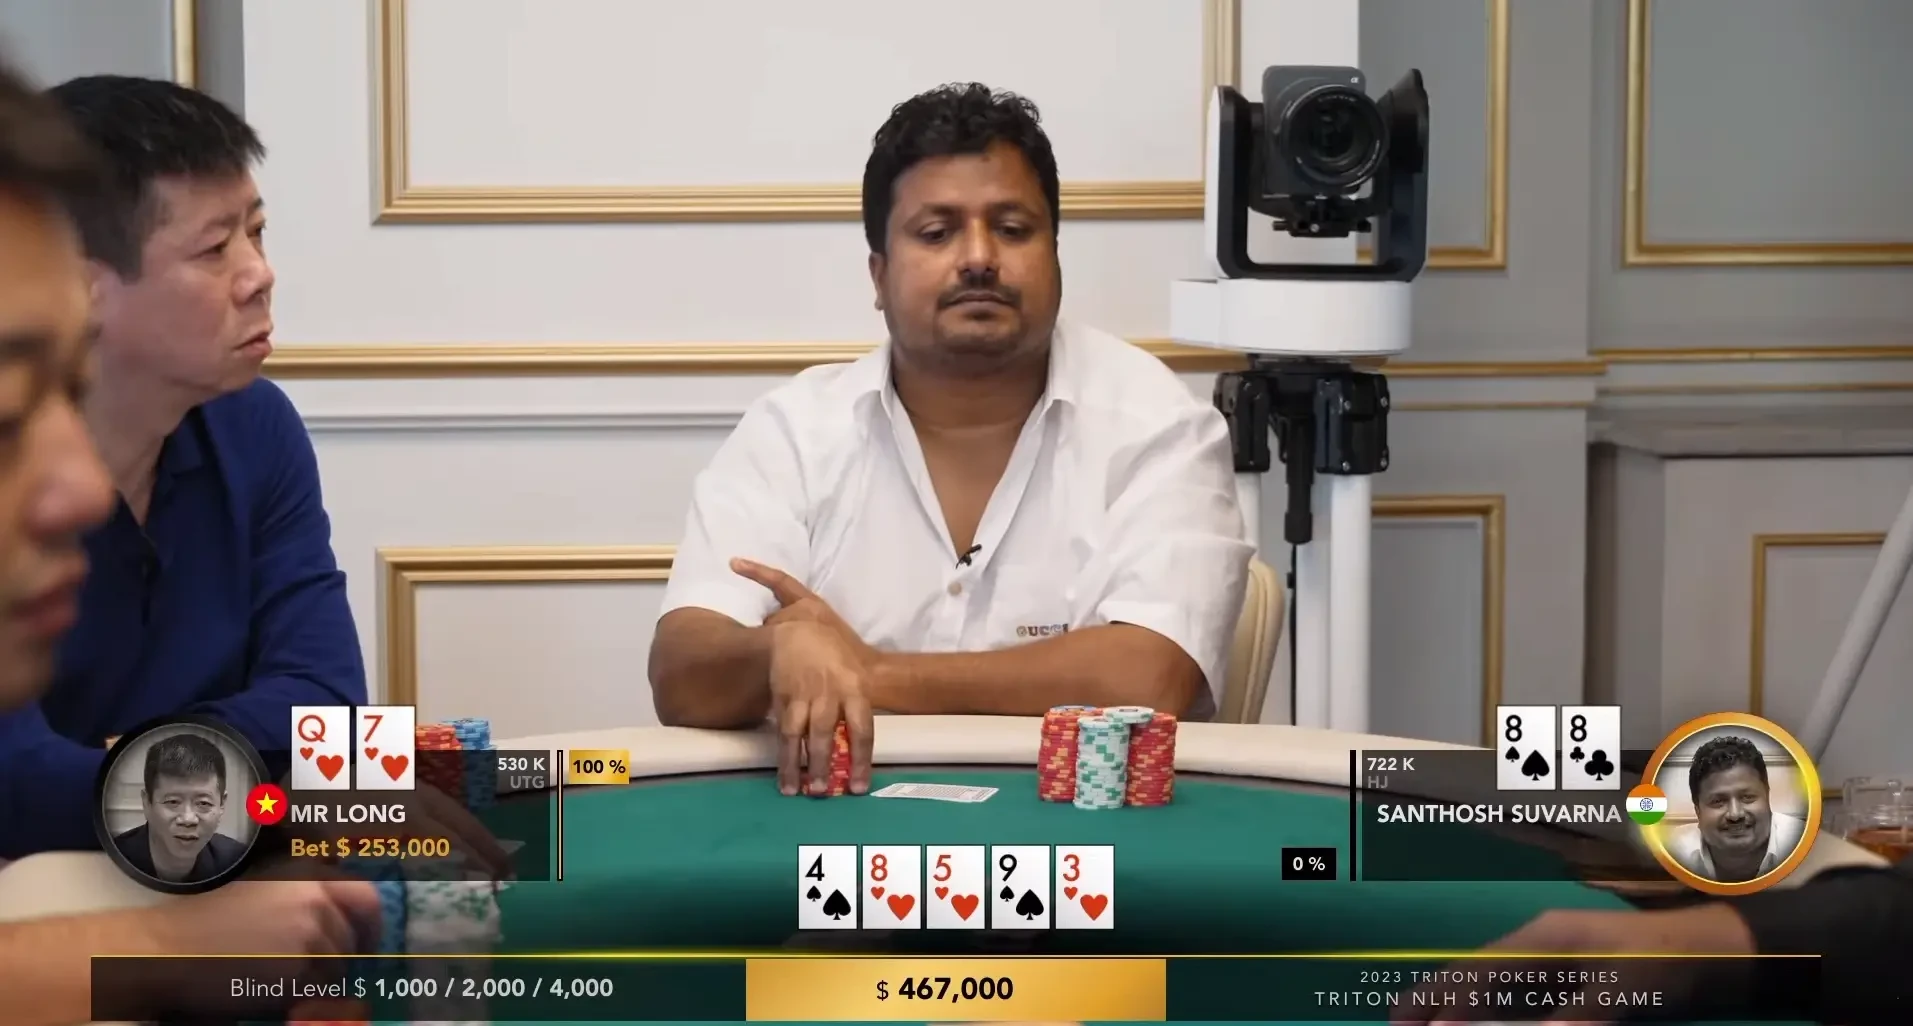 Santhosh seated playing poker at the Triton 2023 Million Dollar Cash Game in London.